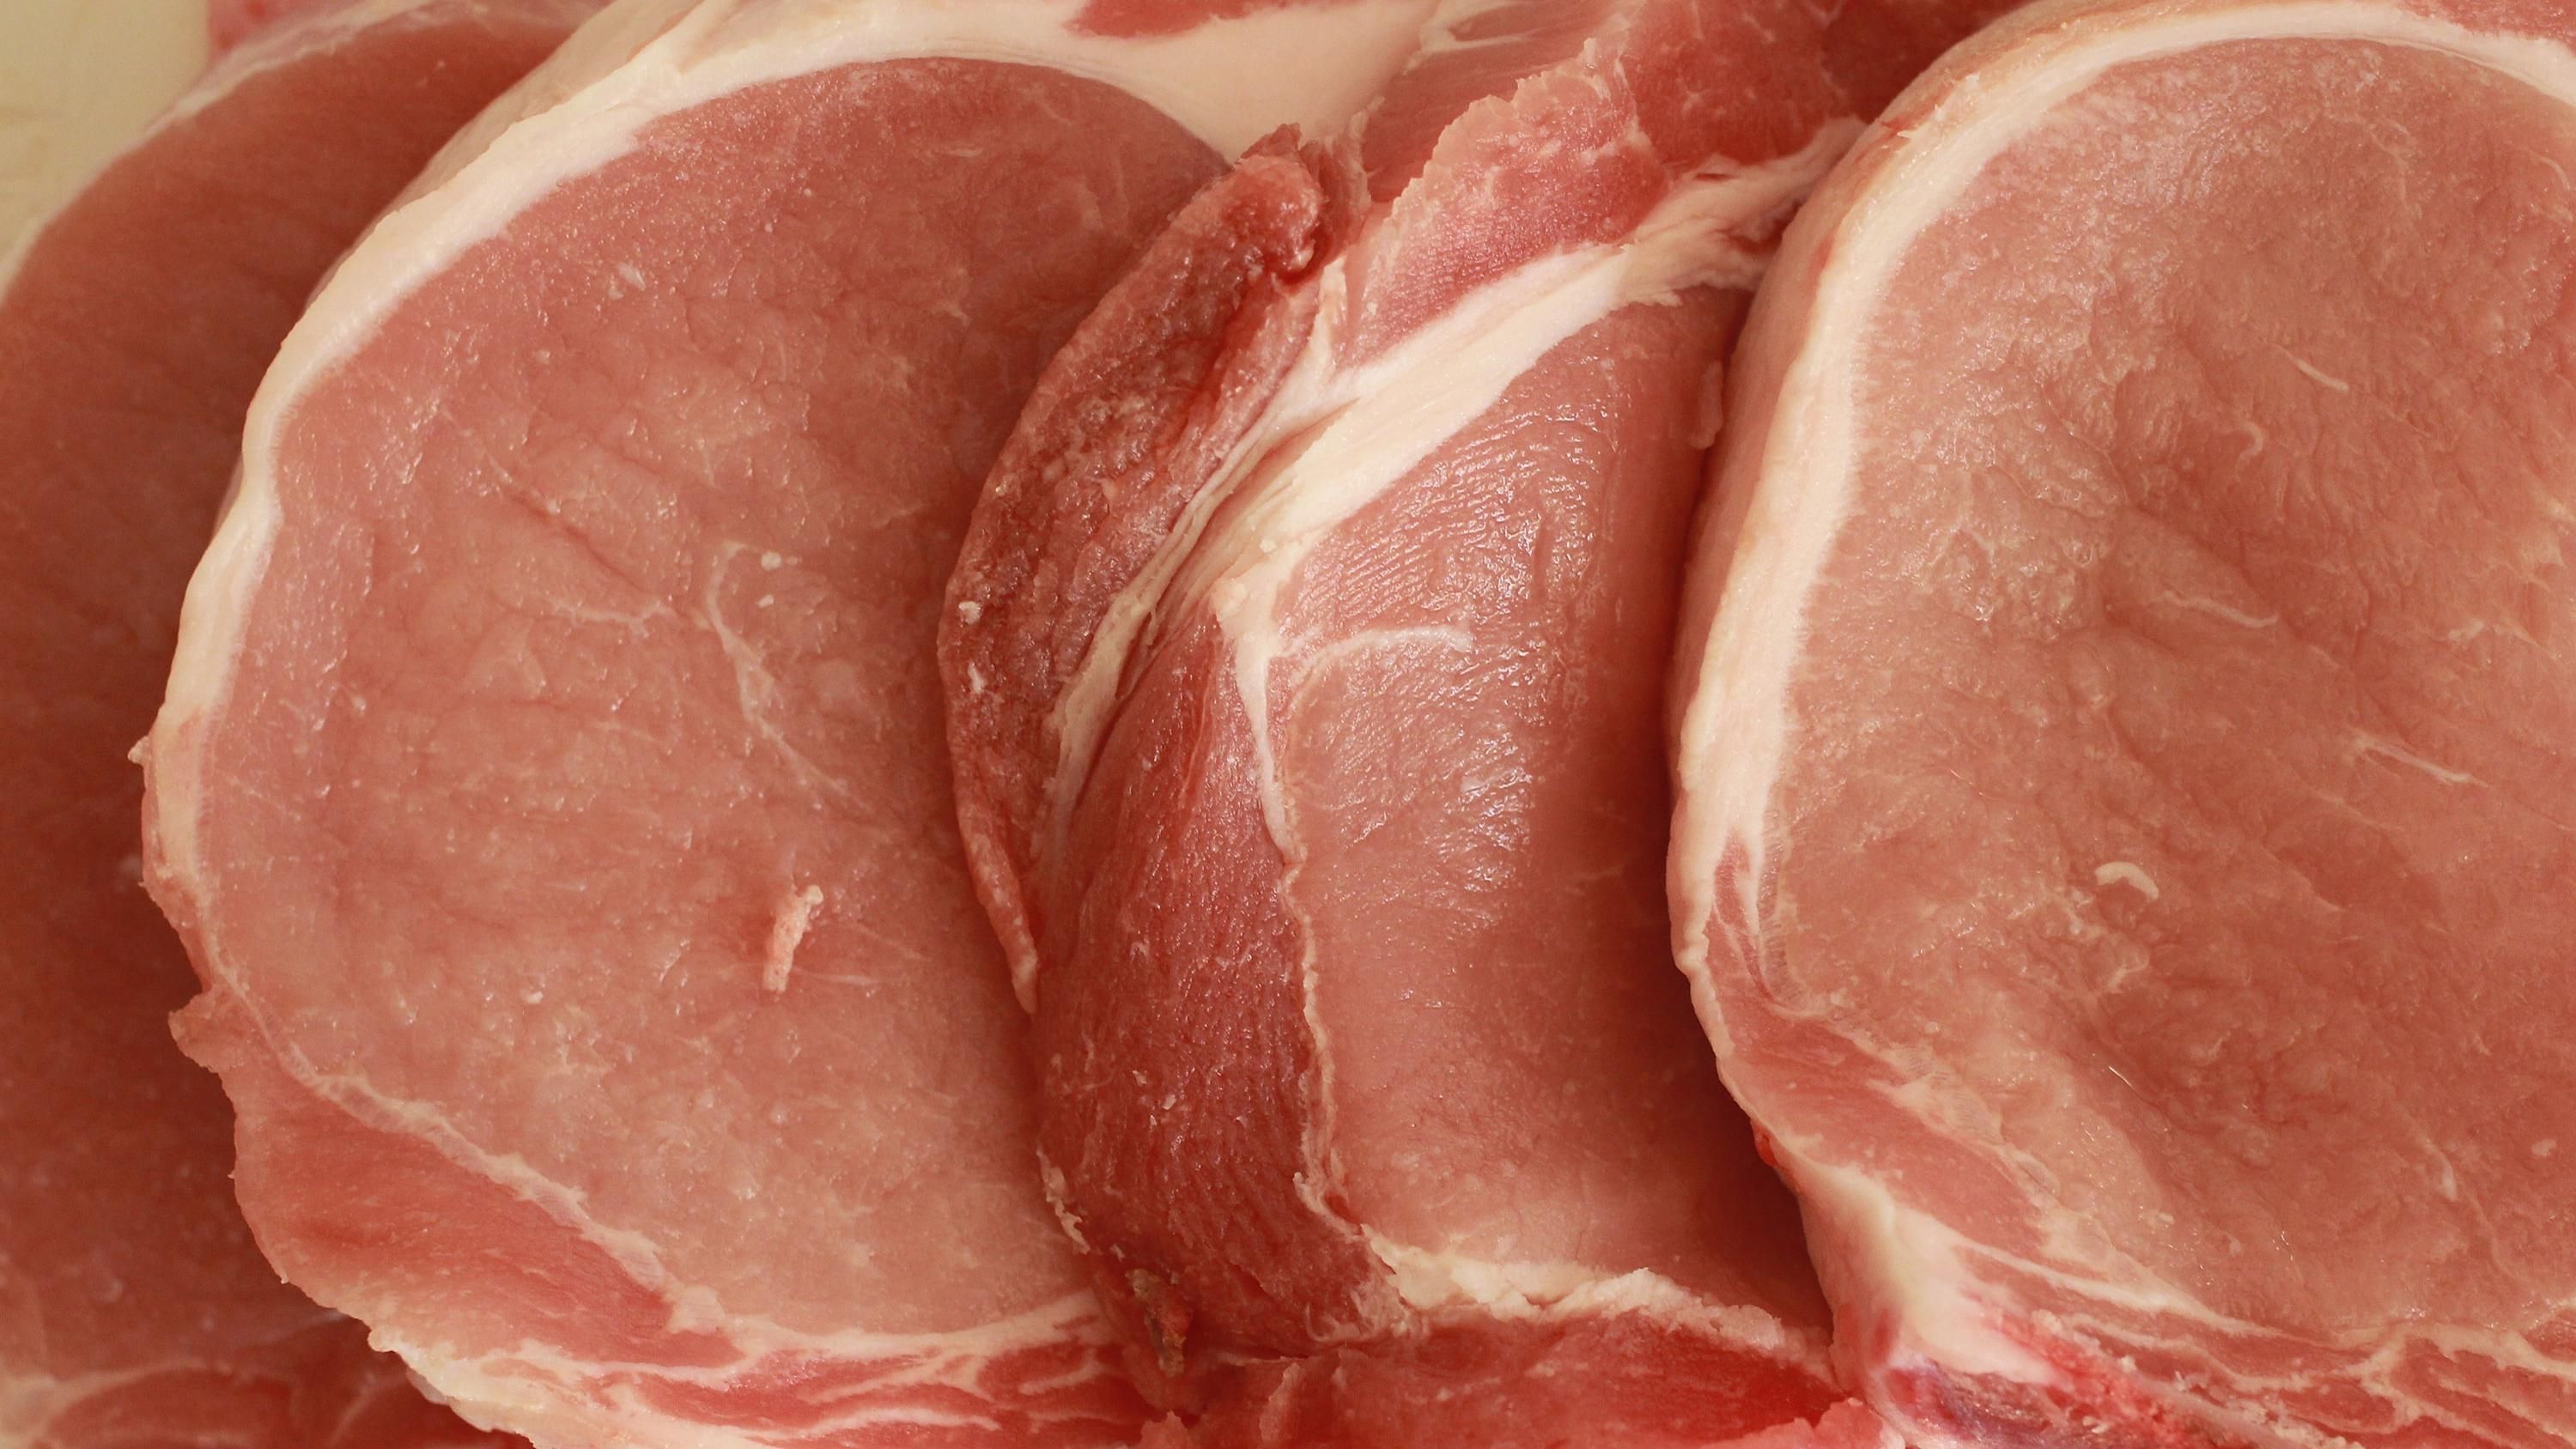 Ще одна європейська країна заборонила імпорт свинини з України 